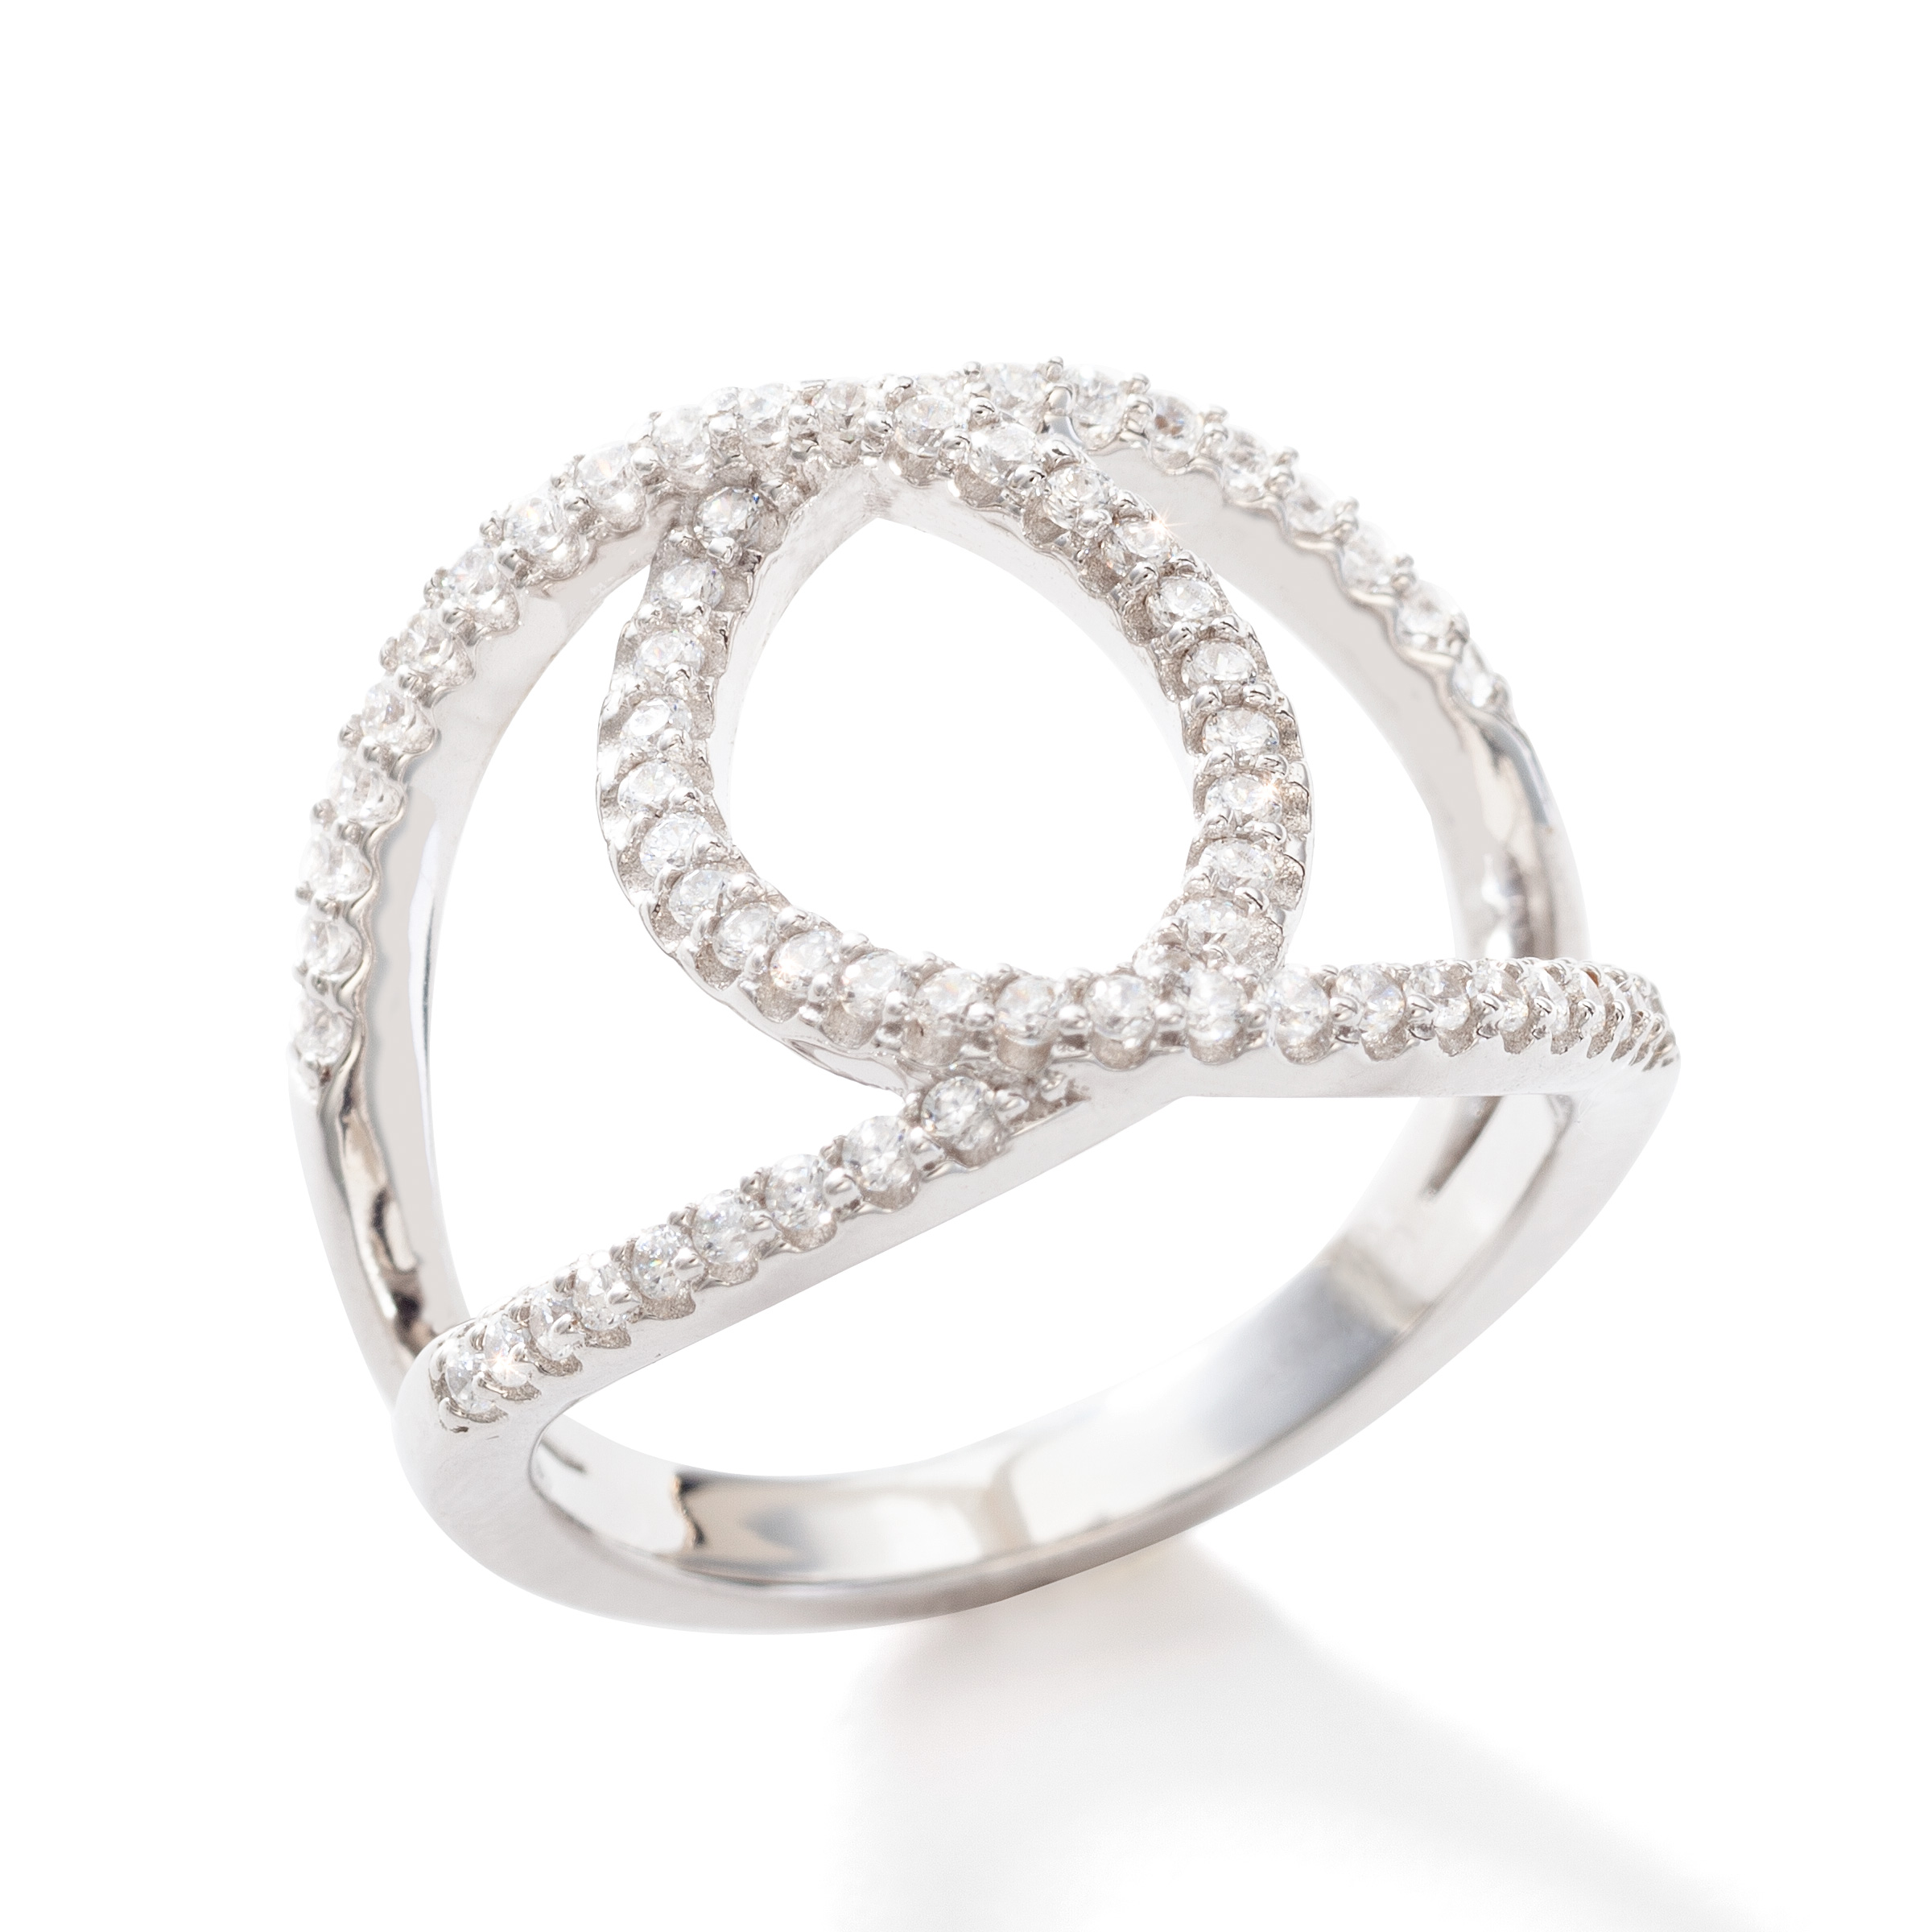 Touchstone Crystal by Swarovski – Jewelry Home Parties